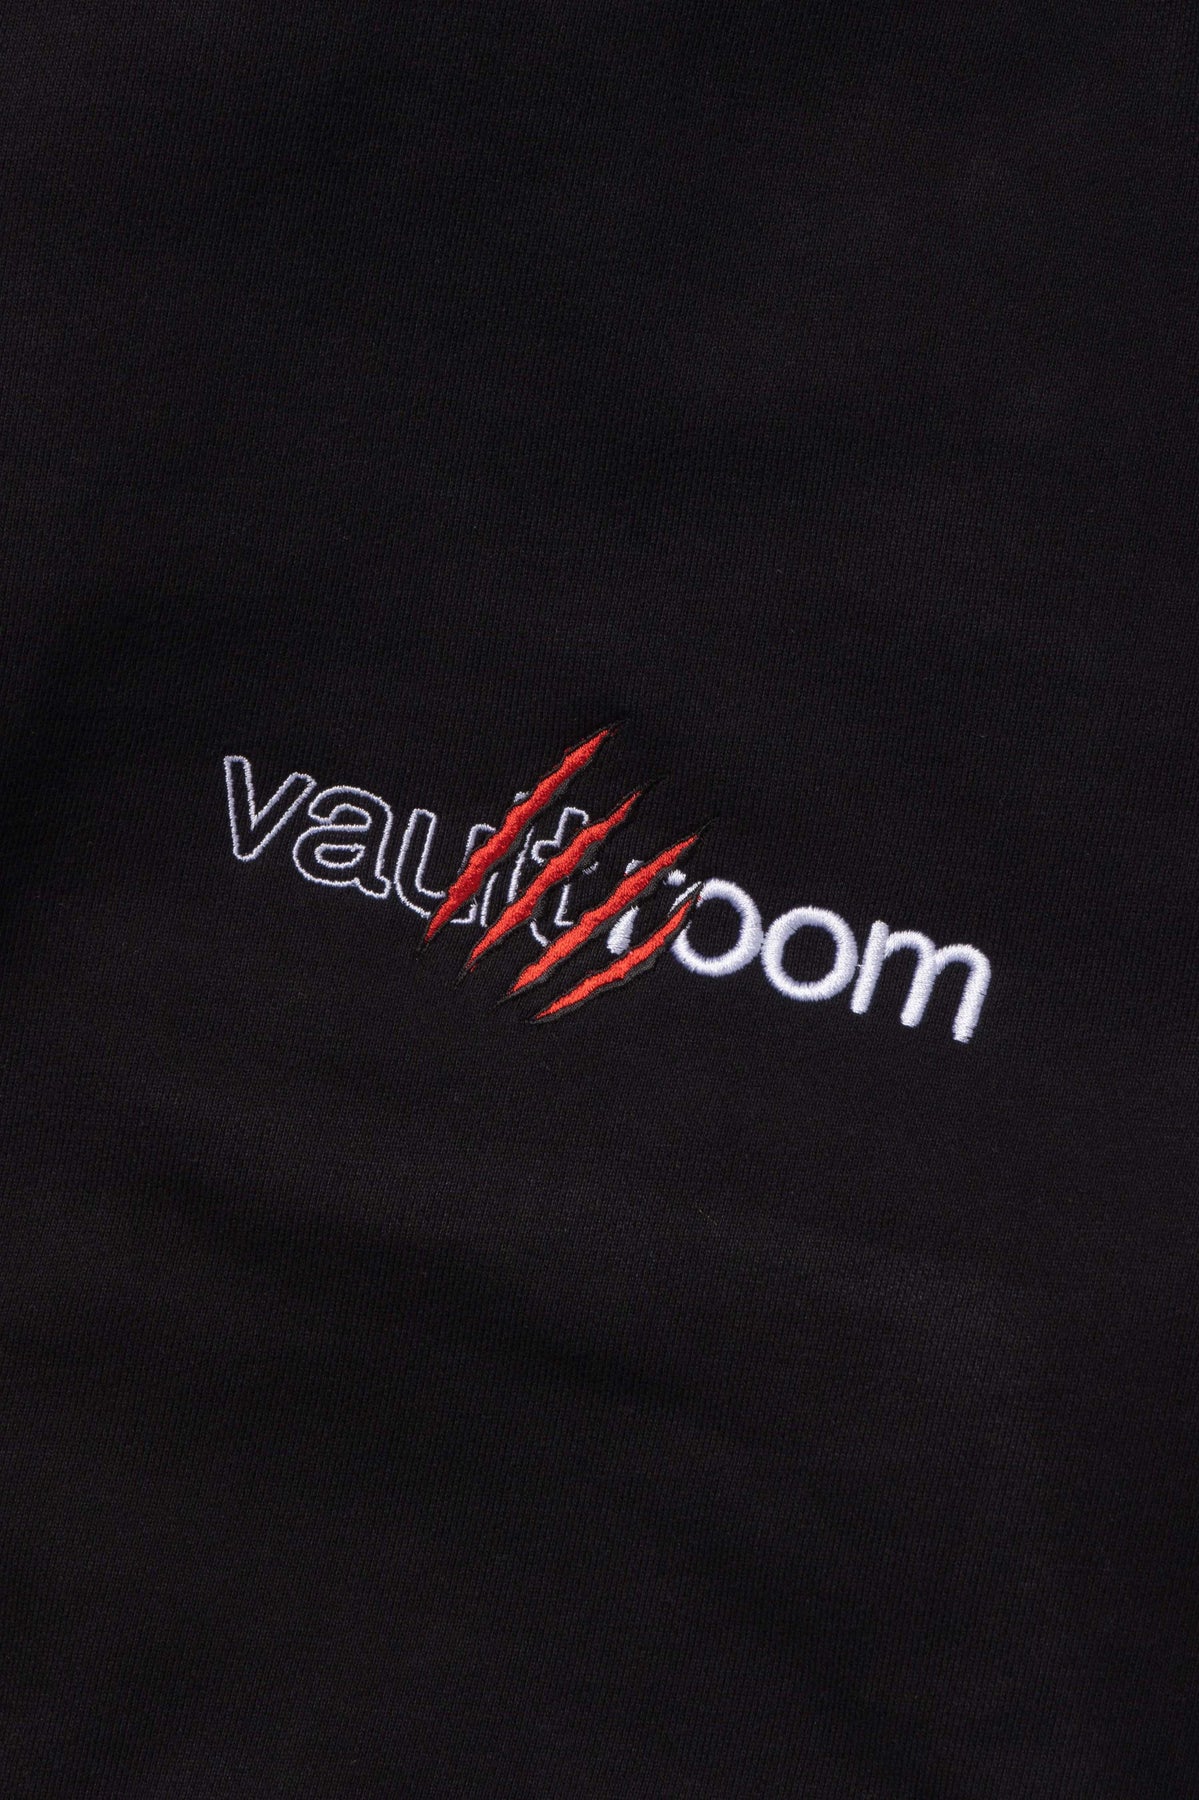 vaultroom VCR KEYREX HOODIE / BLK L sizeボルトルーム